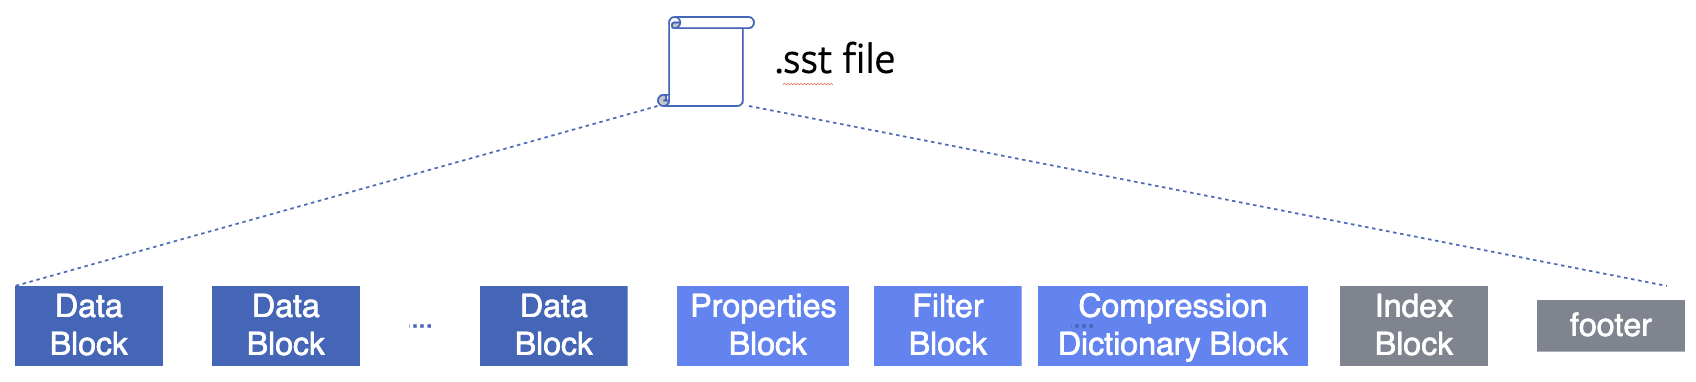 docs/static/images/dictcmp/dictcmp_sst_blocks.png